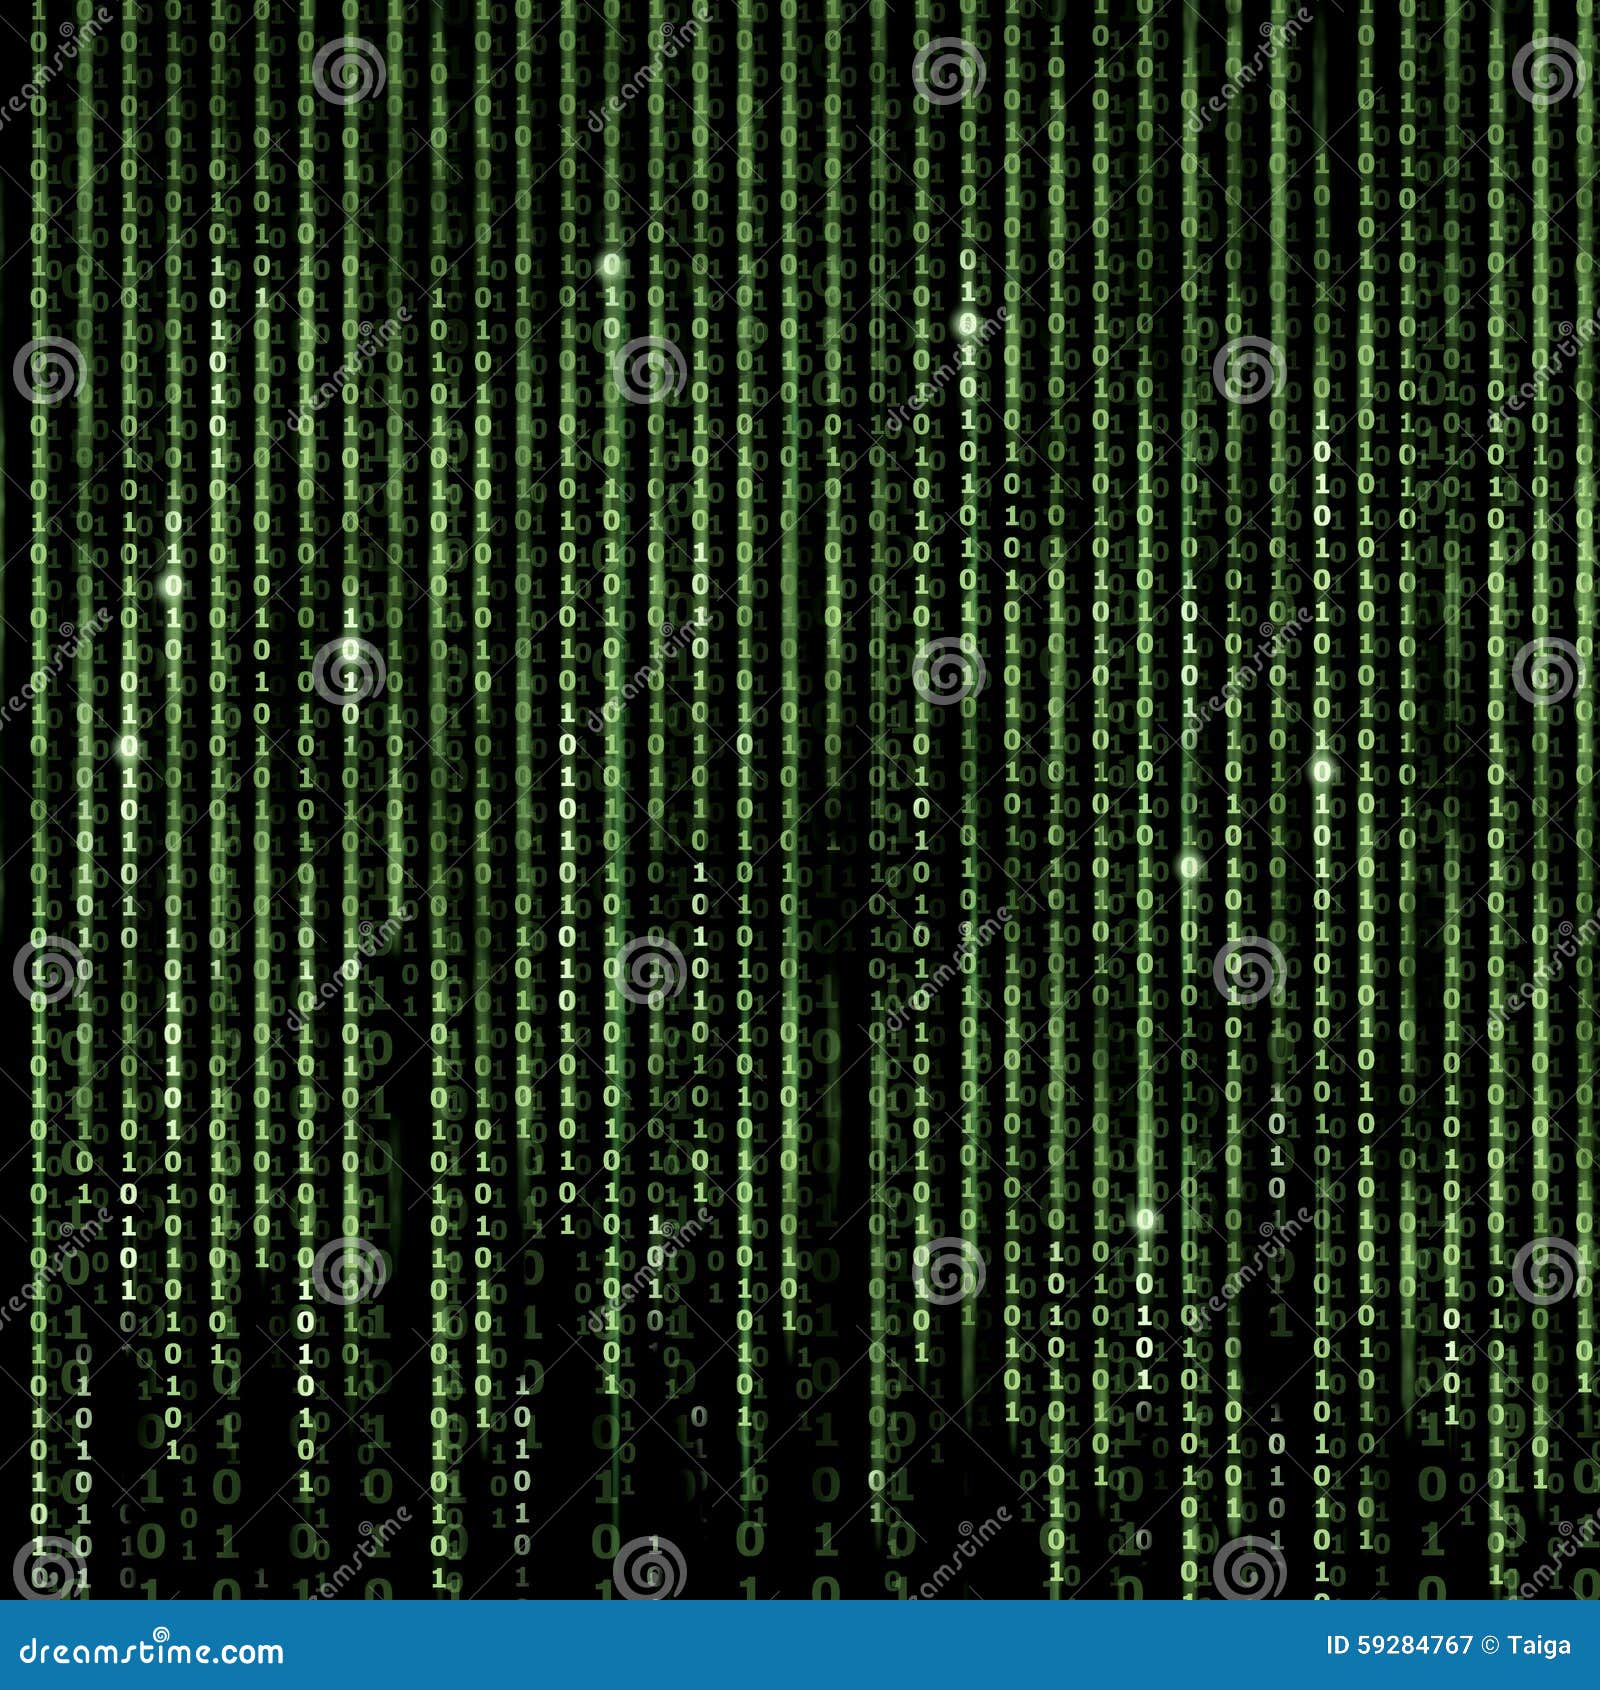 Green Matrix Abstract Background, Program Binary Code Stock Image ...